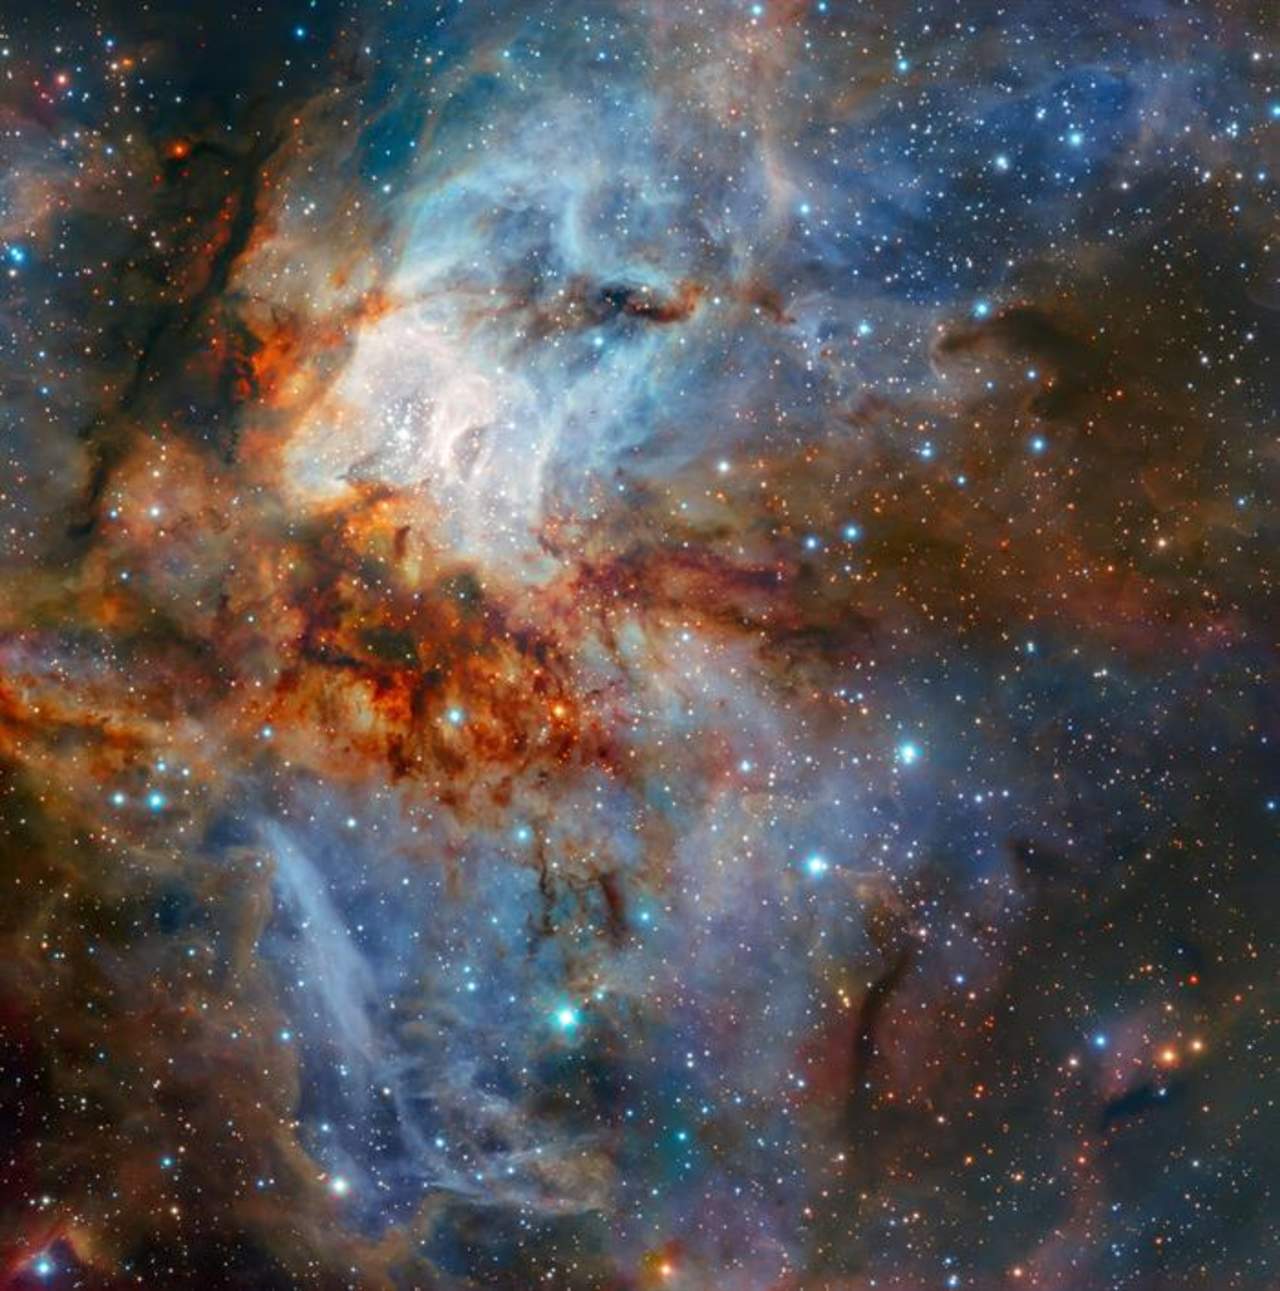 Captan imagen detallada del cúmulo estelar RCW 38